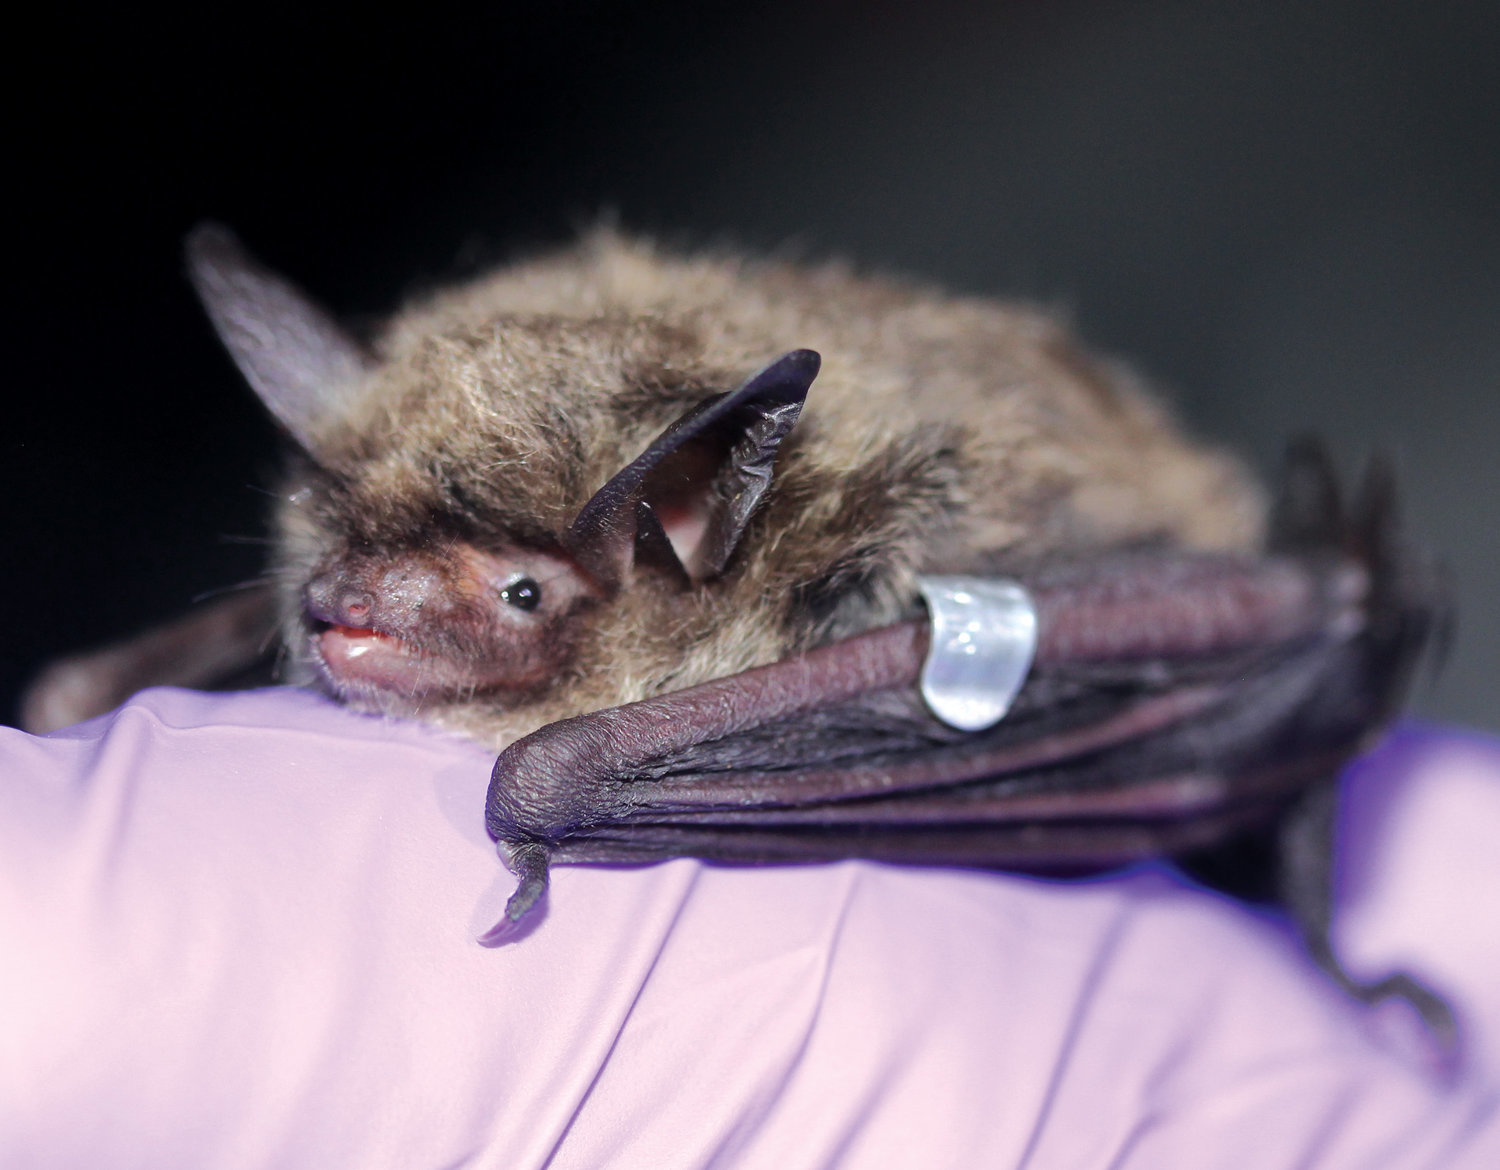 The northern long-eared bat has been declared an endangered species.